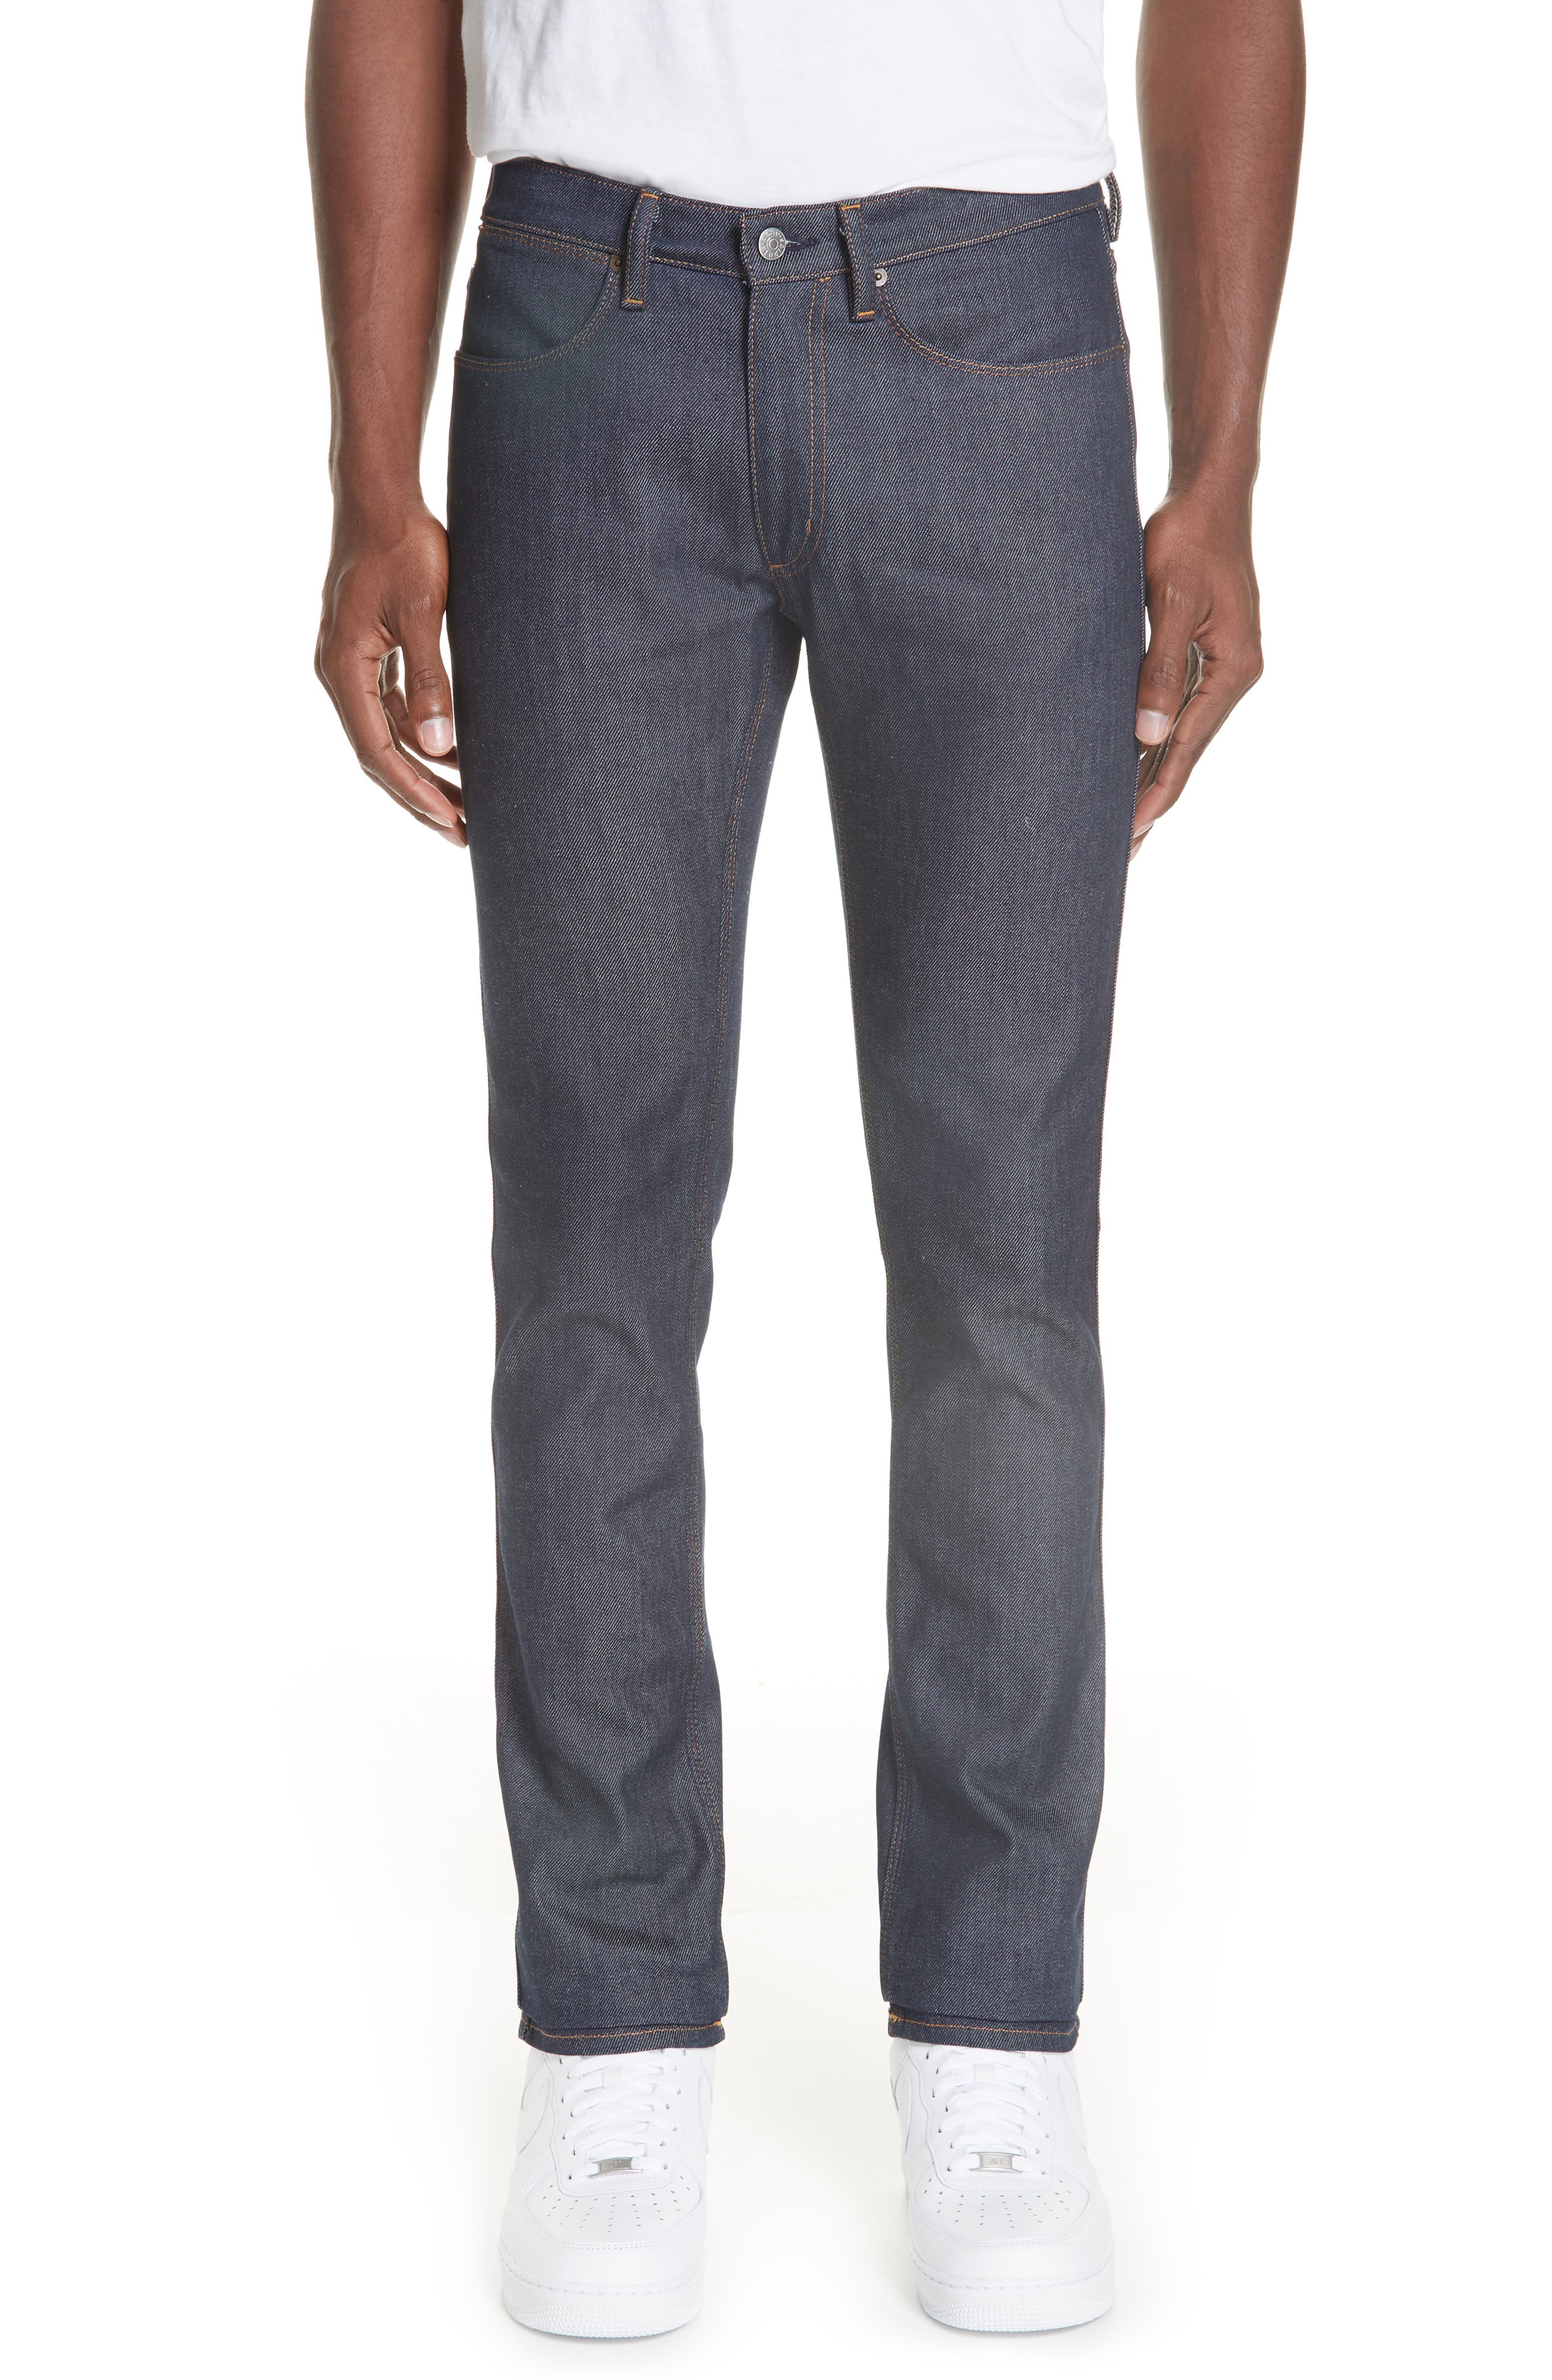 Acne Studios Max Slim Fit Jeans (Indigo) | Nordstrom